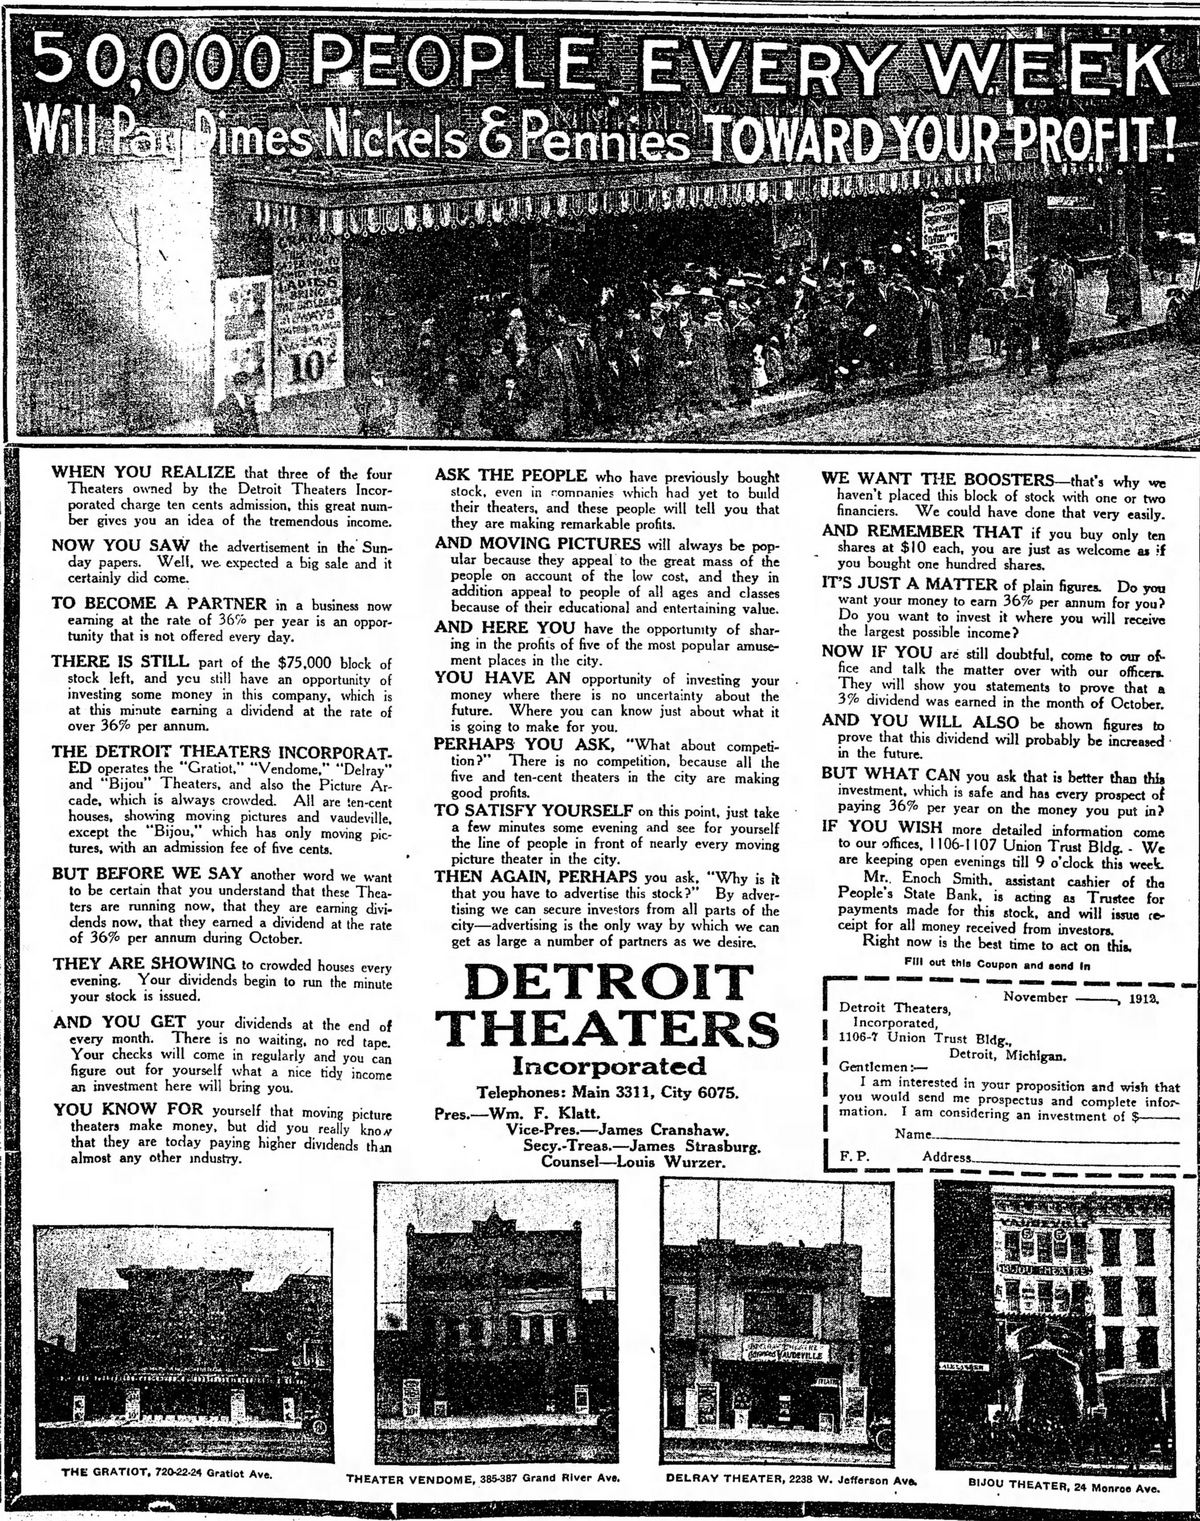 Bijou Theatre - November 1912 Ad